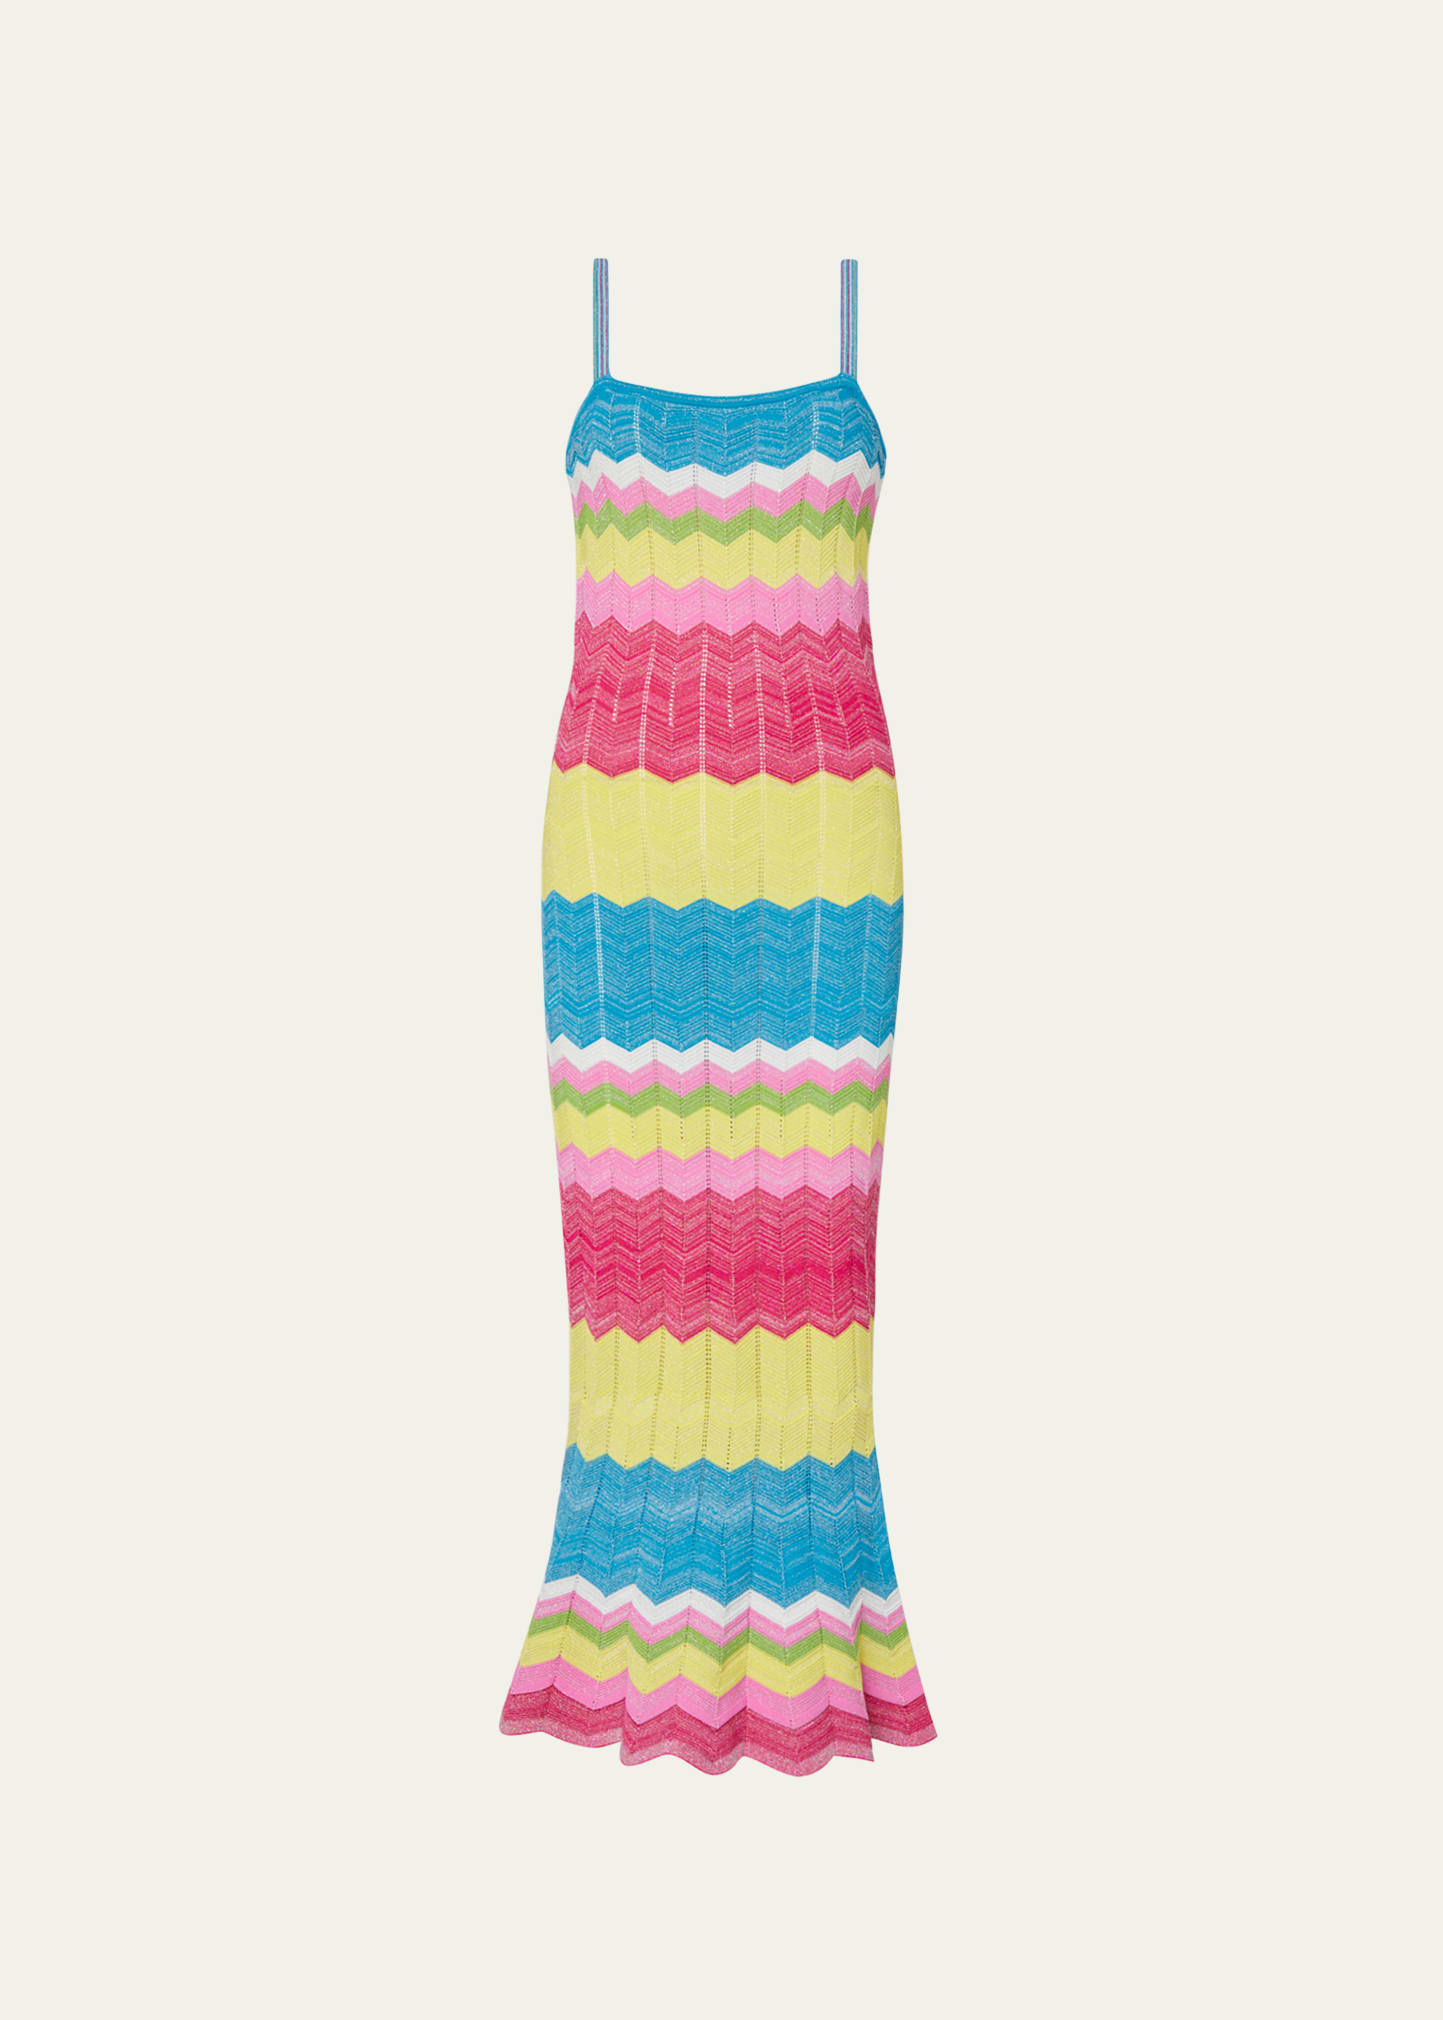 Olana Zig-Zag Knit Mermaid Dress